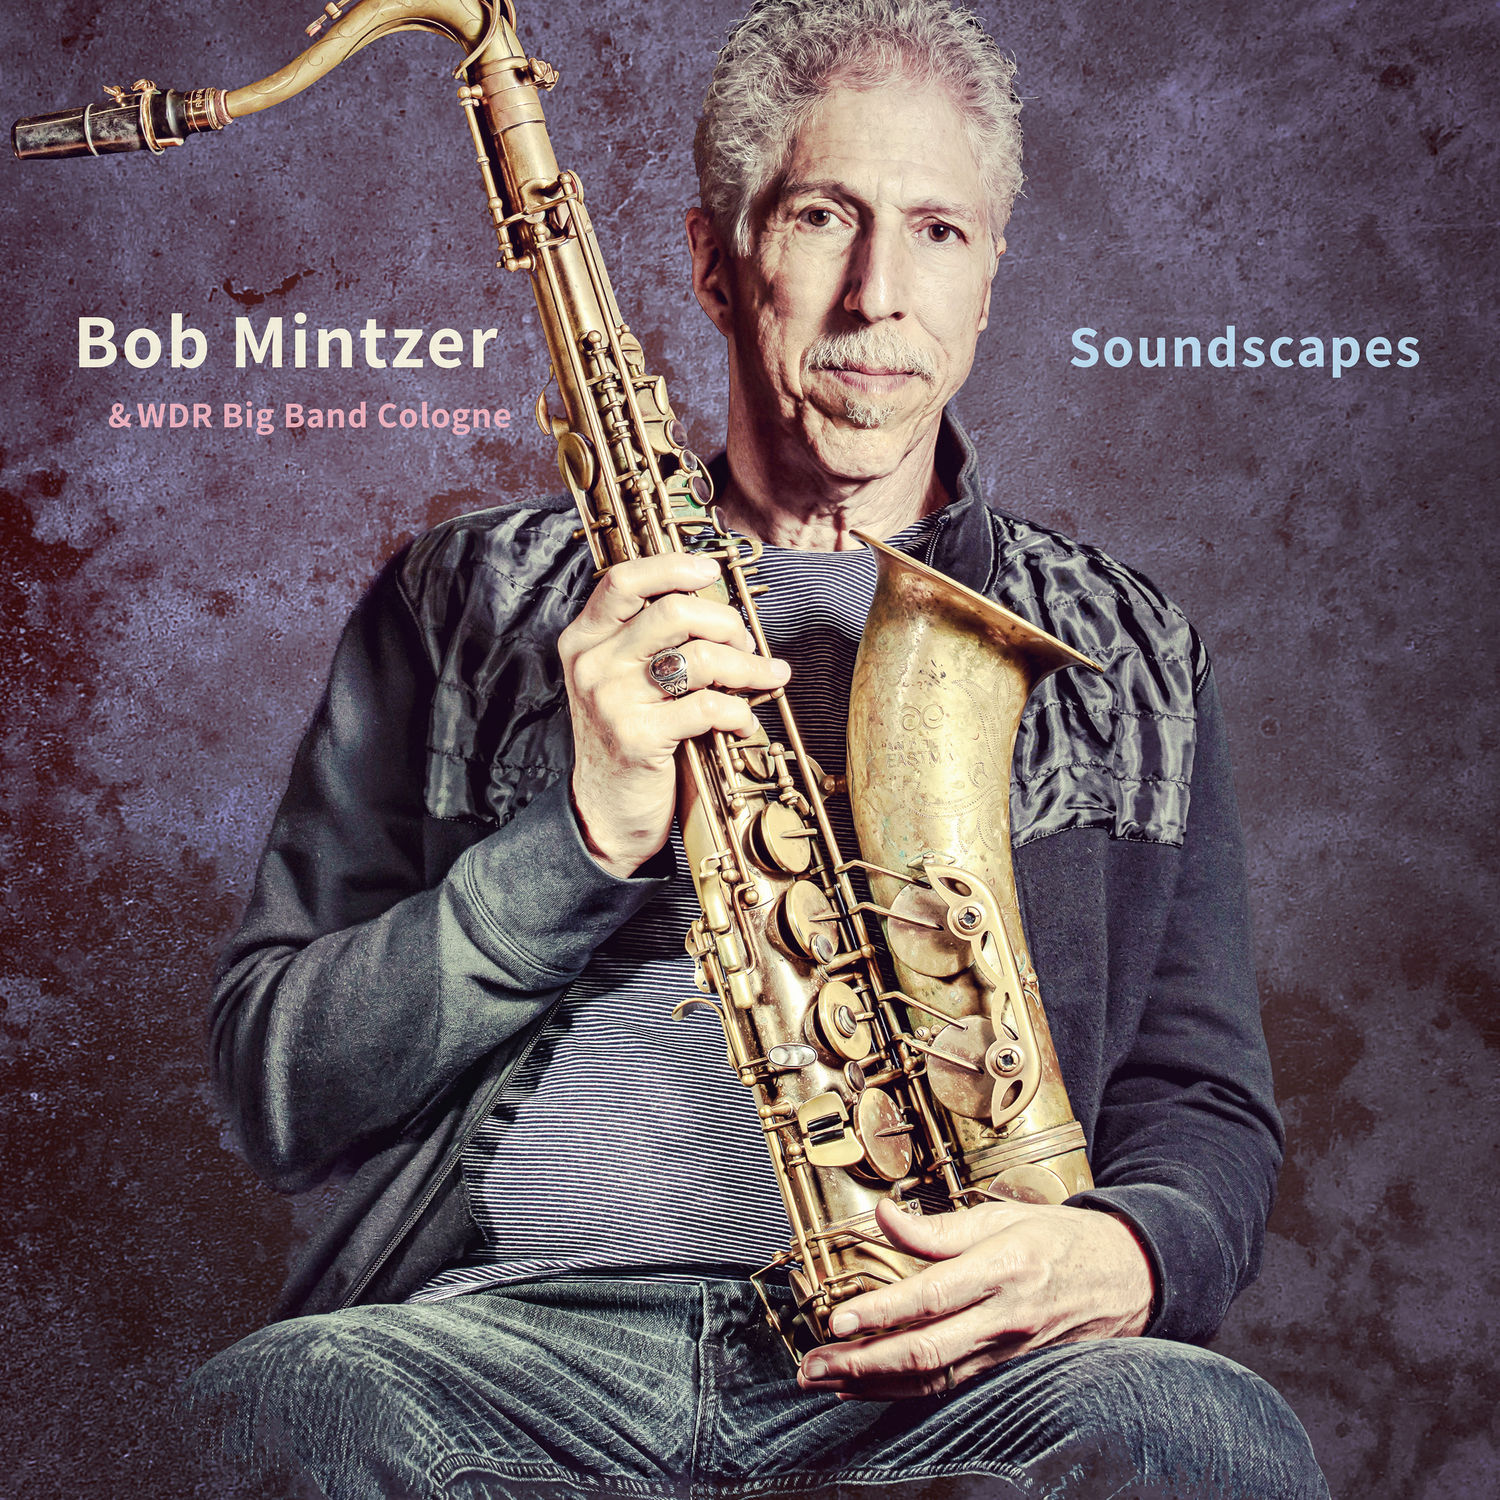 Bob Mintzer & WDR Big Band Cologne – Soundscapes (2021) [FLAC 24bit/48kHz]